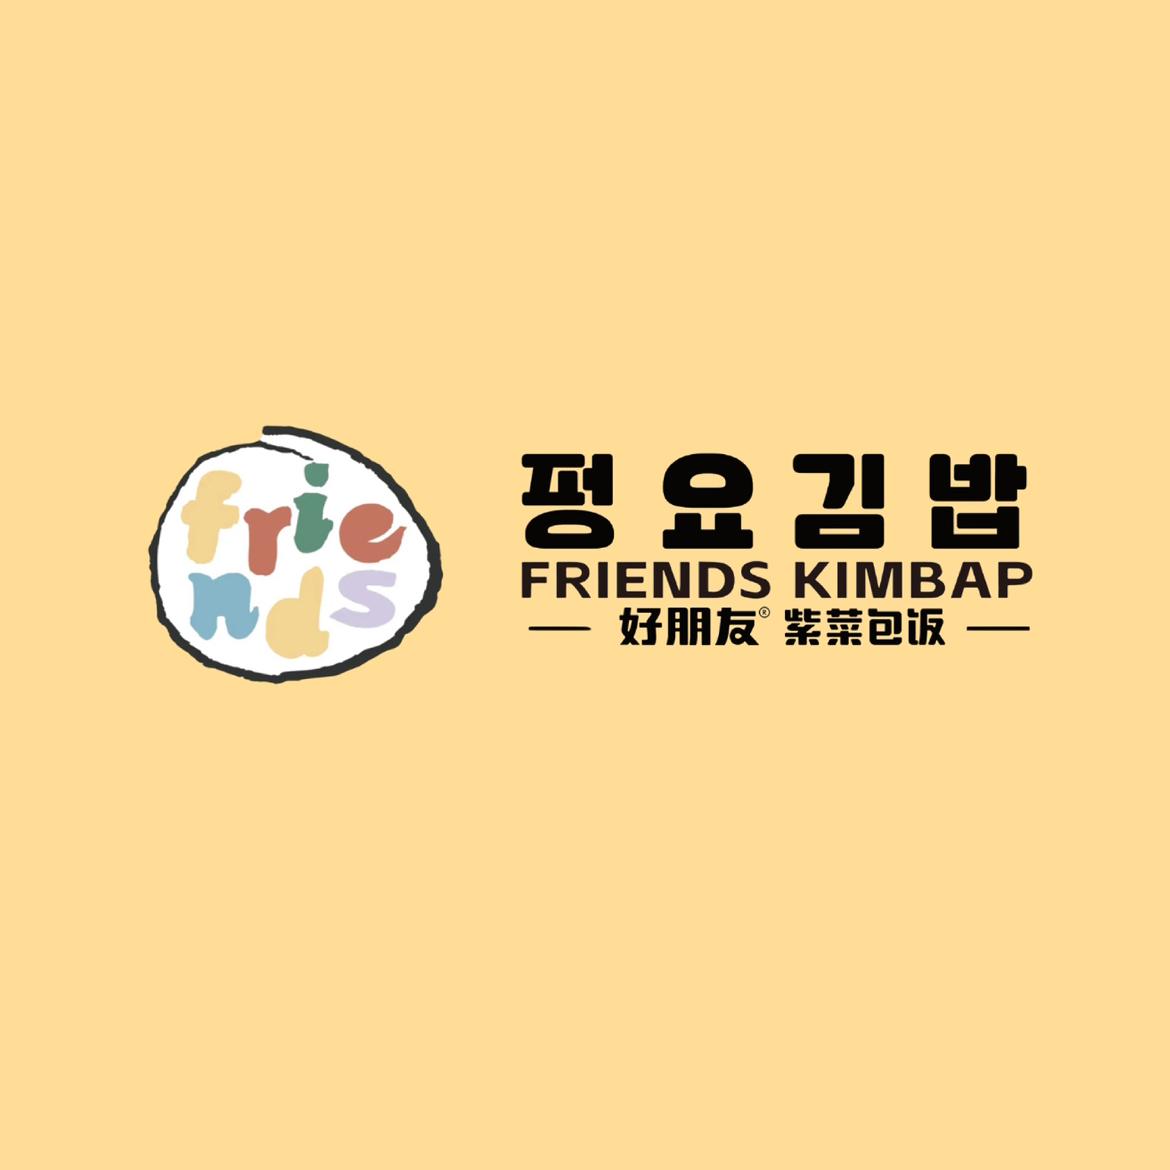 Friends Kimbap